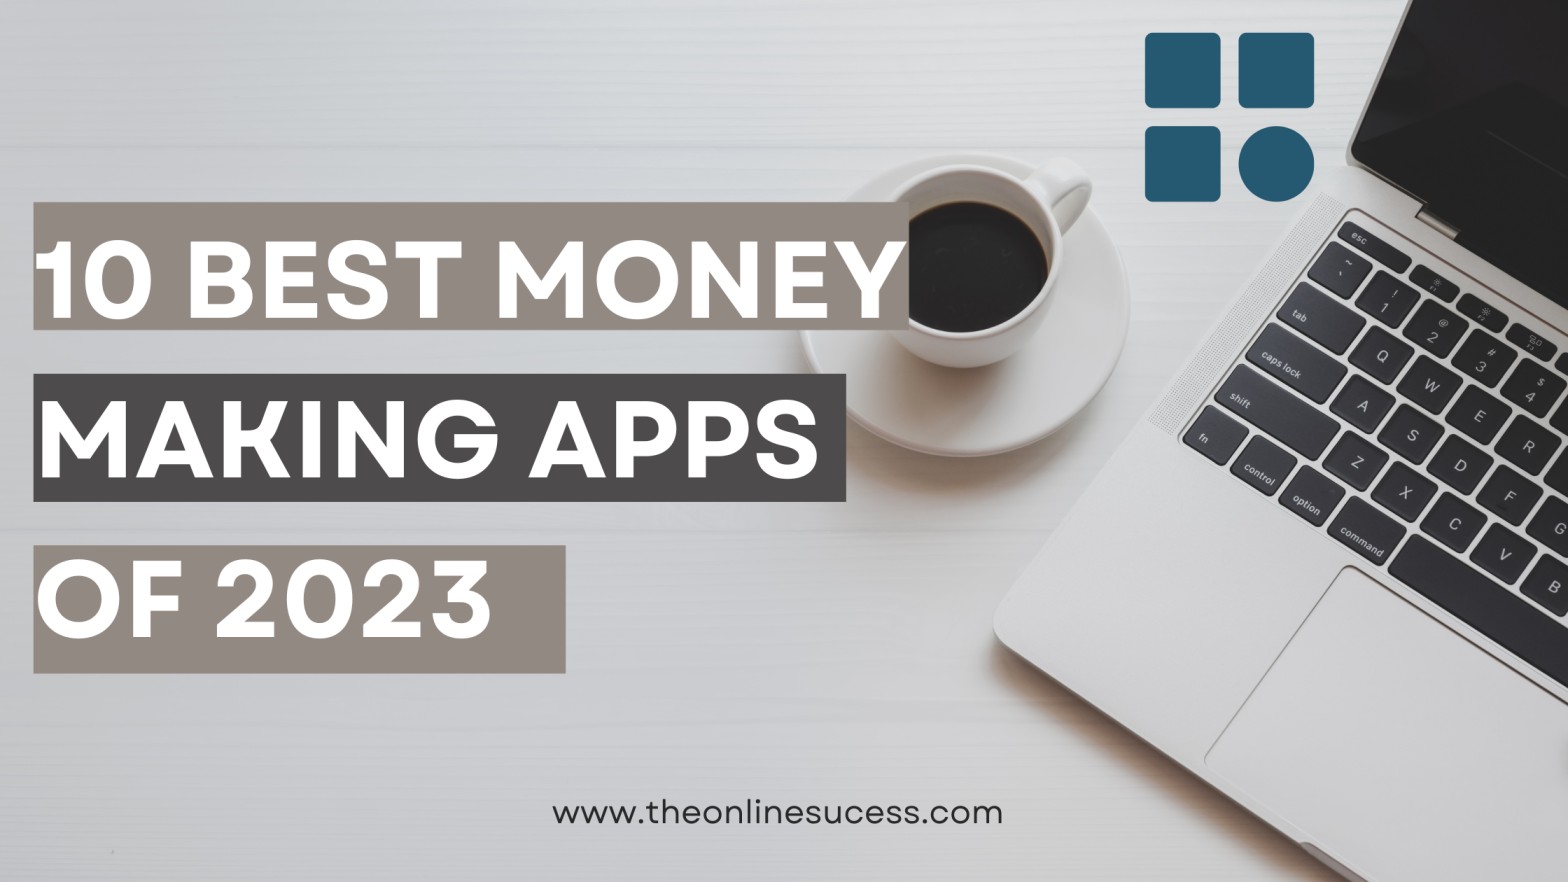 10 Best Money-Making Apps of 2023